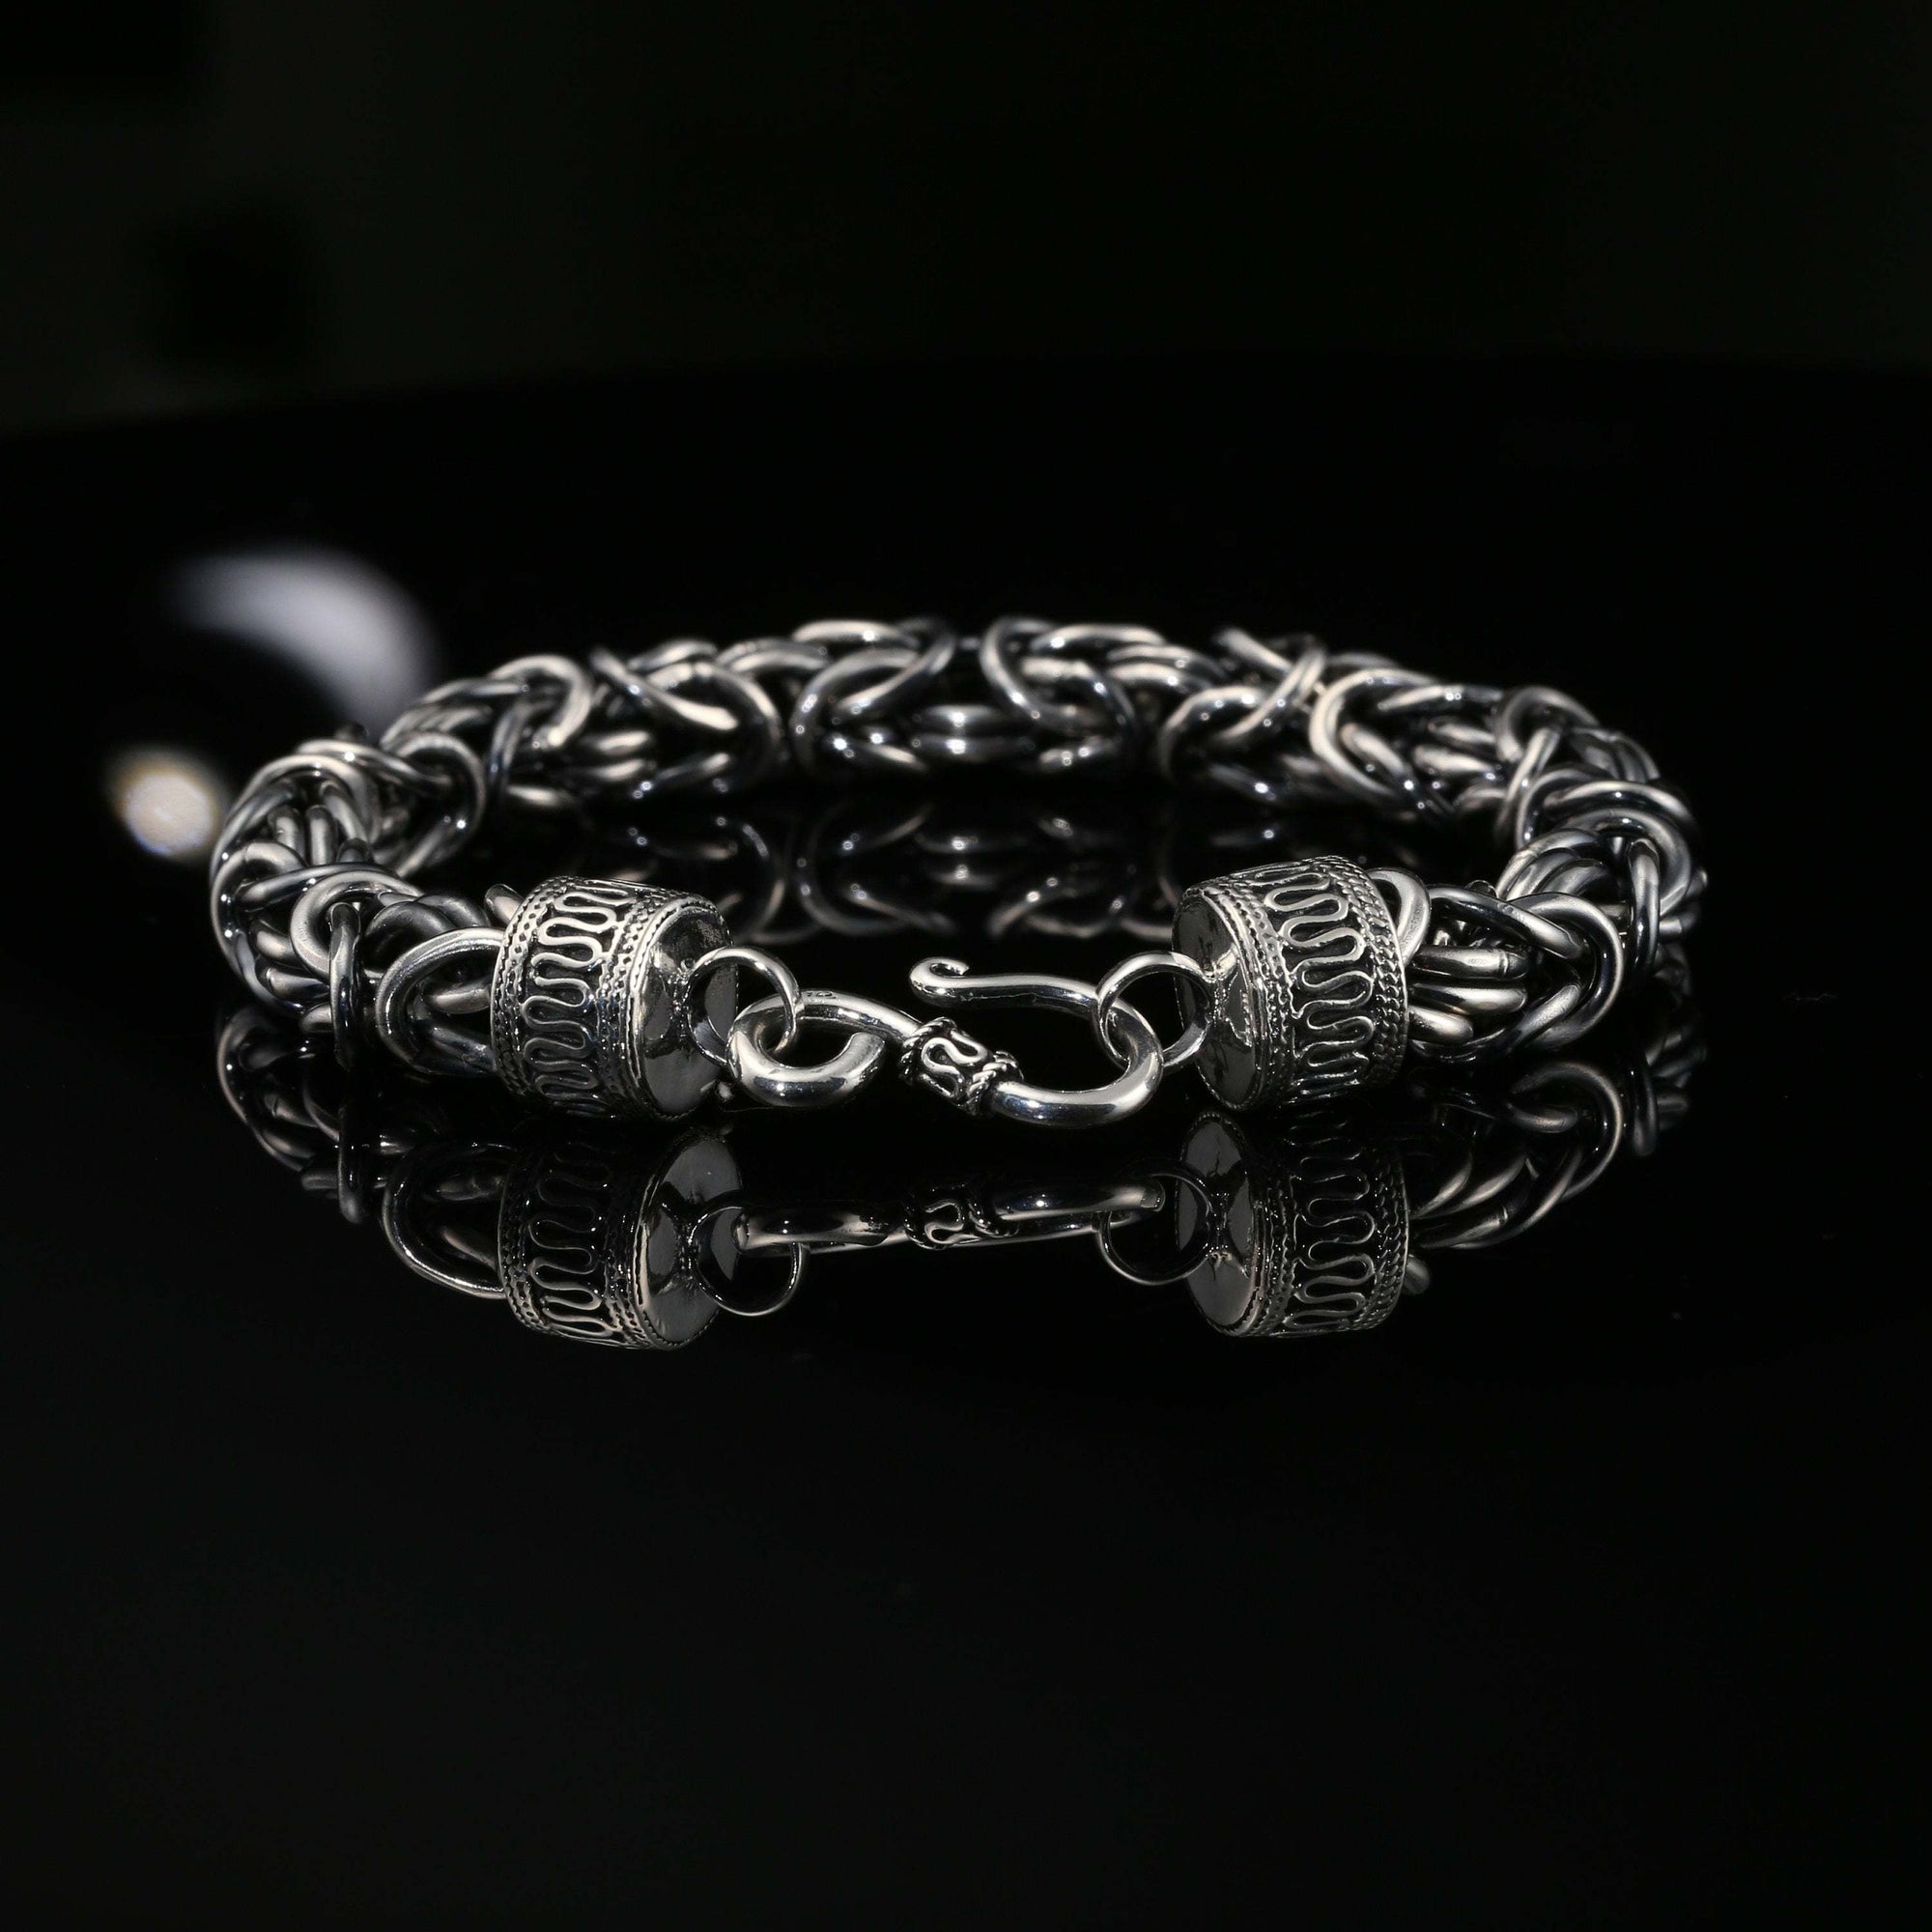 Dark Sterling Silver Byzantine Chain Bracelet with Hook Clasp